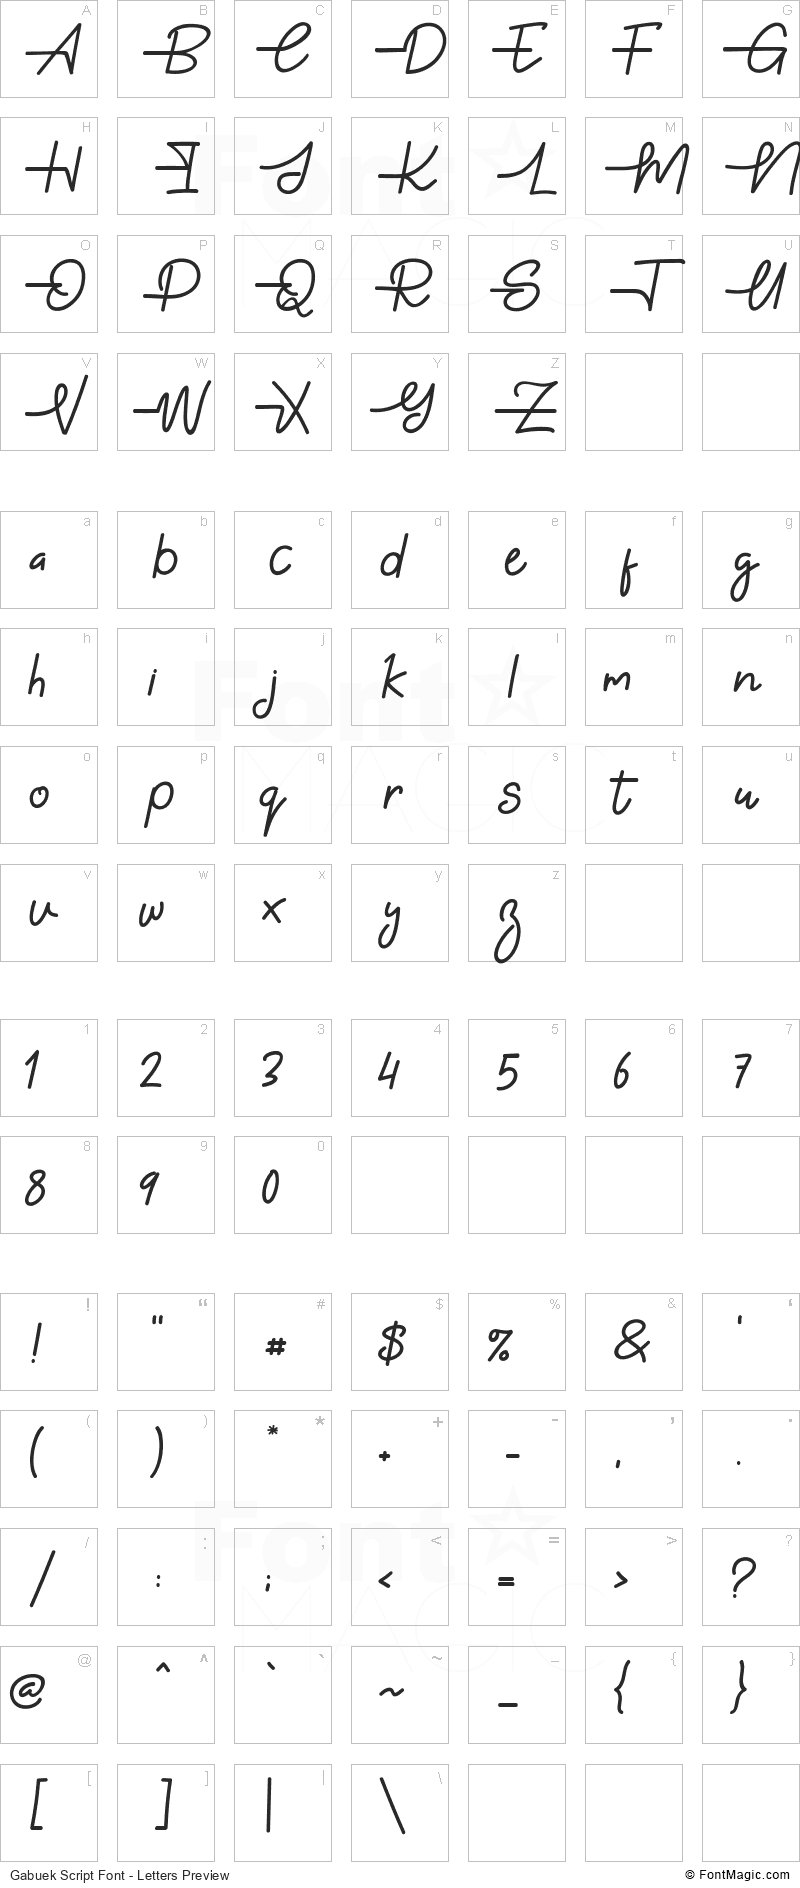 Gabuek Script Font - All Latters Preview Chart